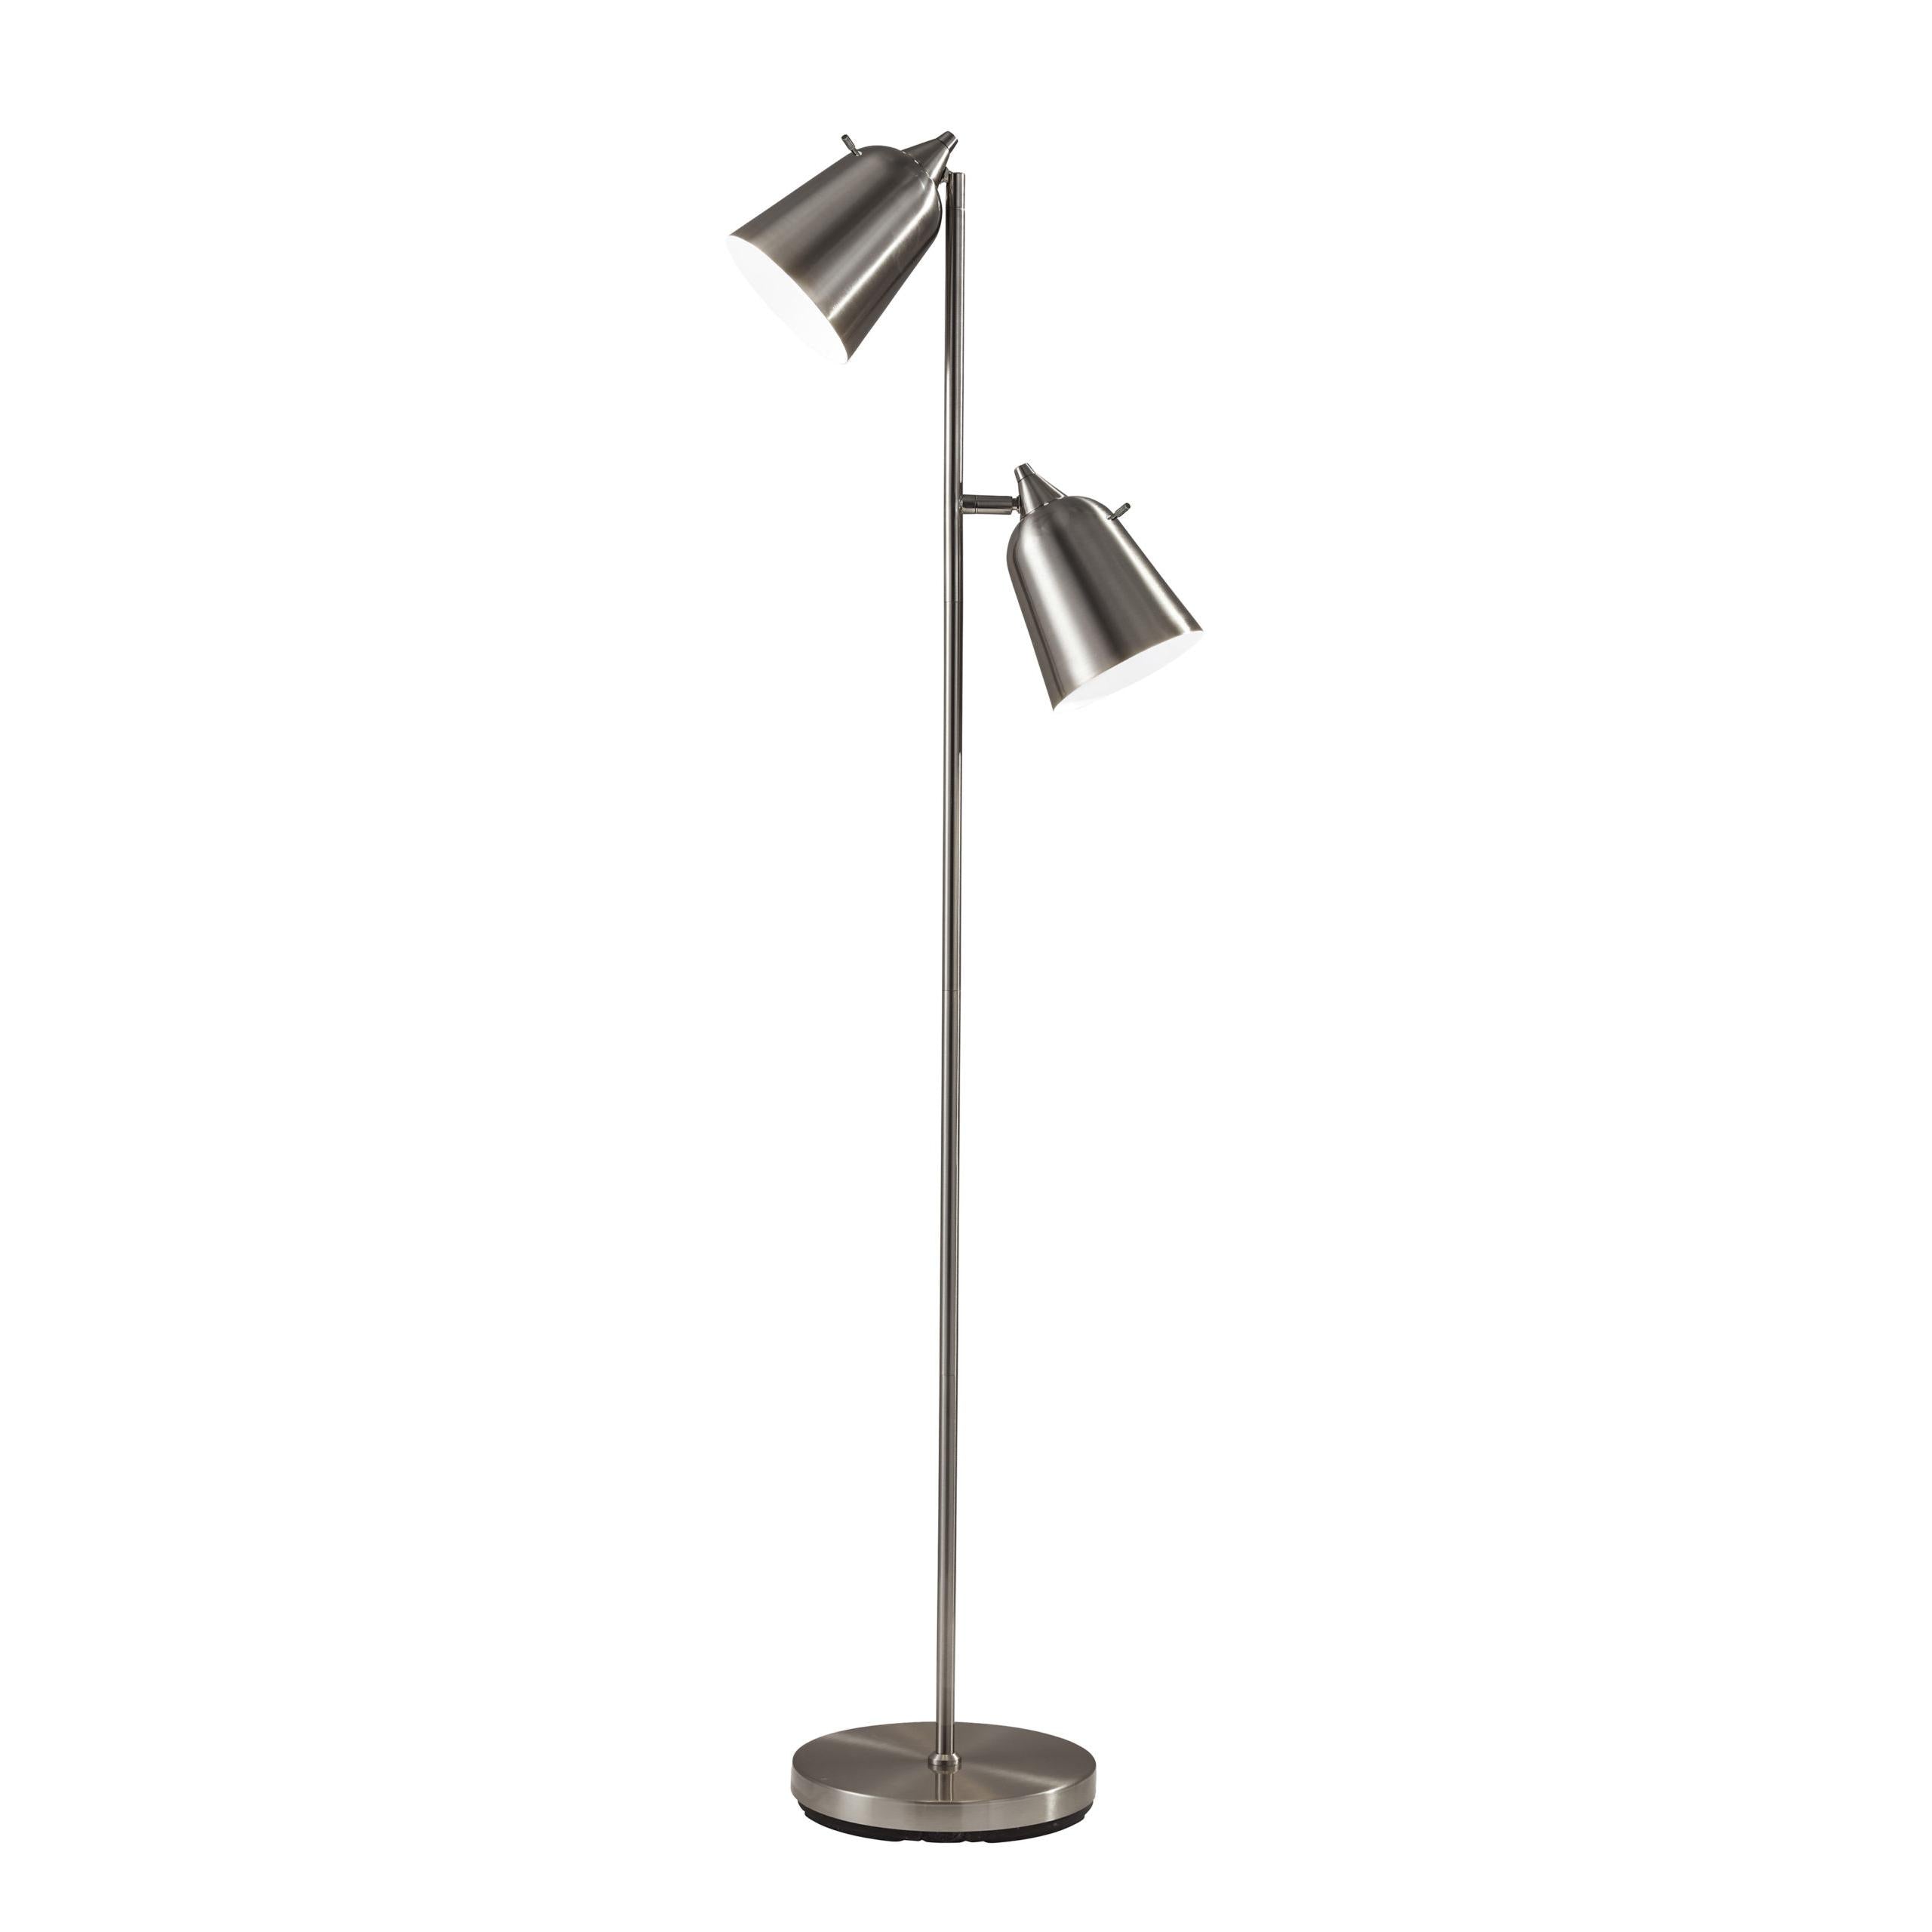 NADINE Floor lamp Stainless steel - 3237-22 | ADESSO